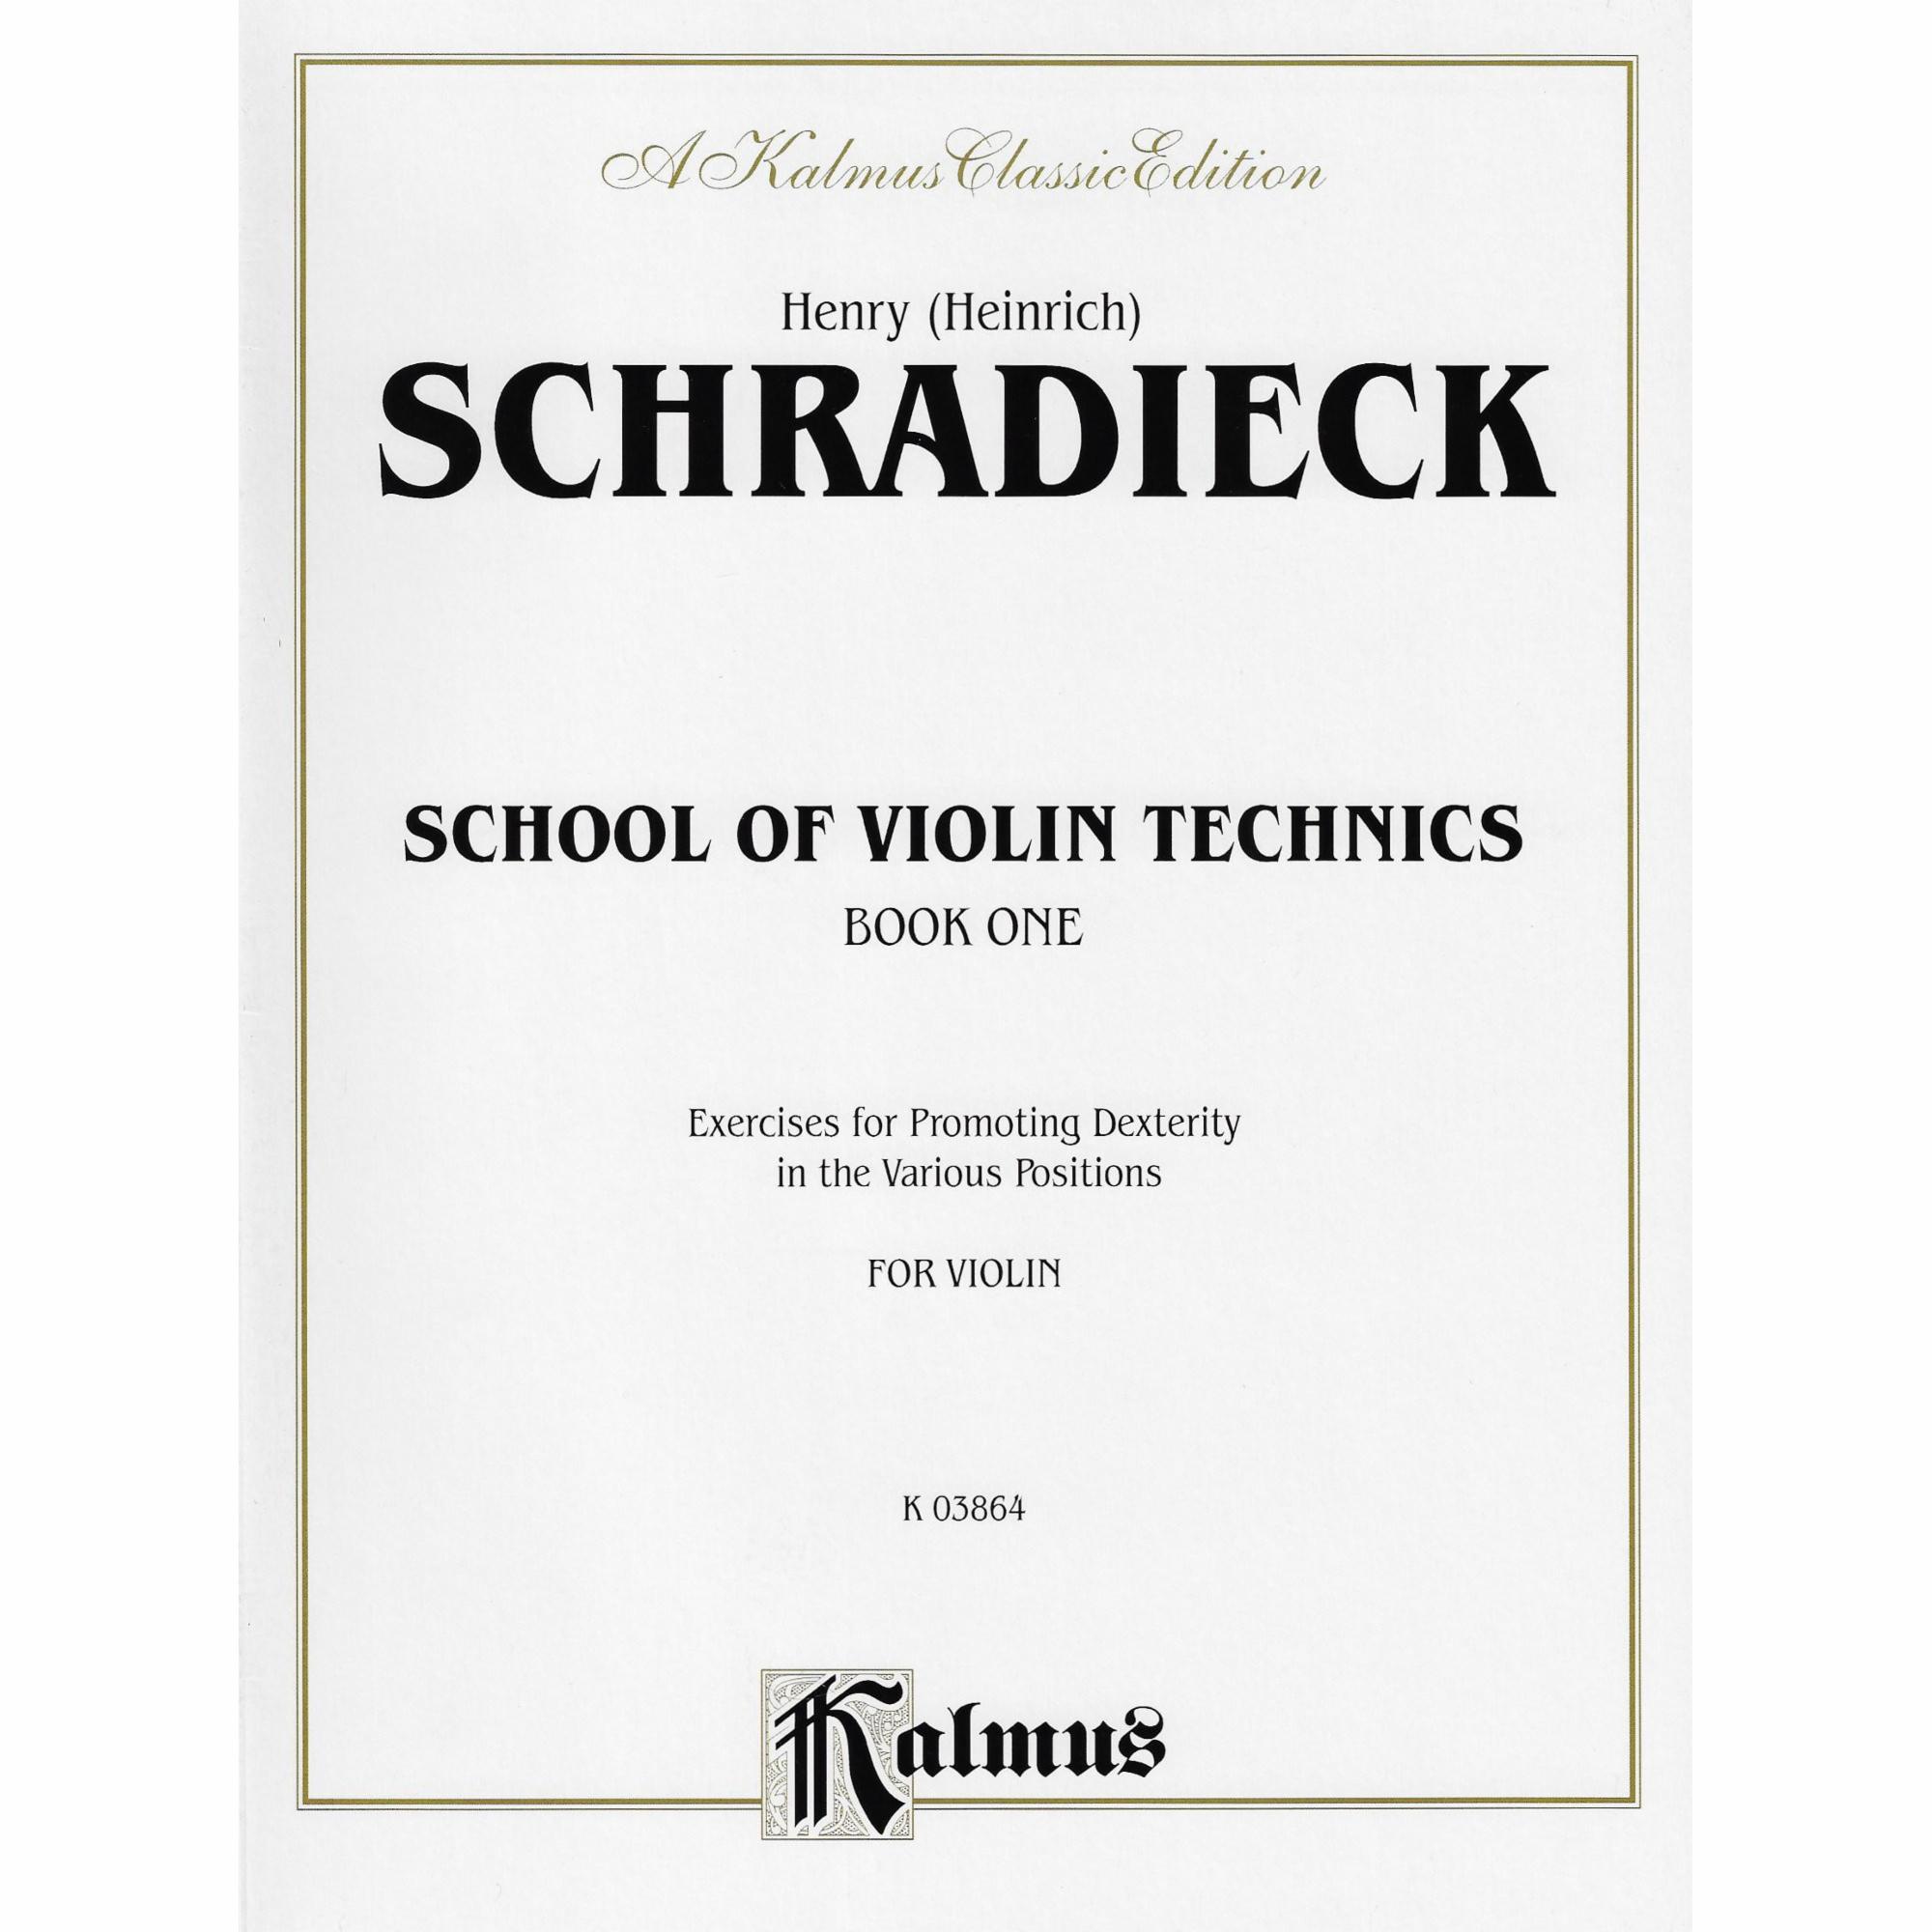 Schradieck -- School of Violin Technics, Book One